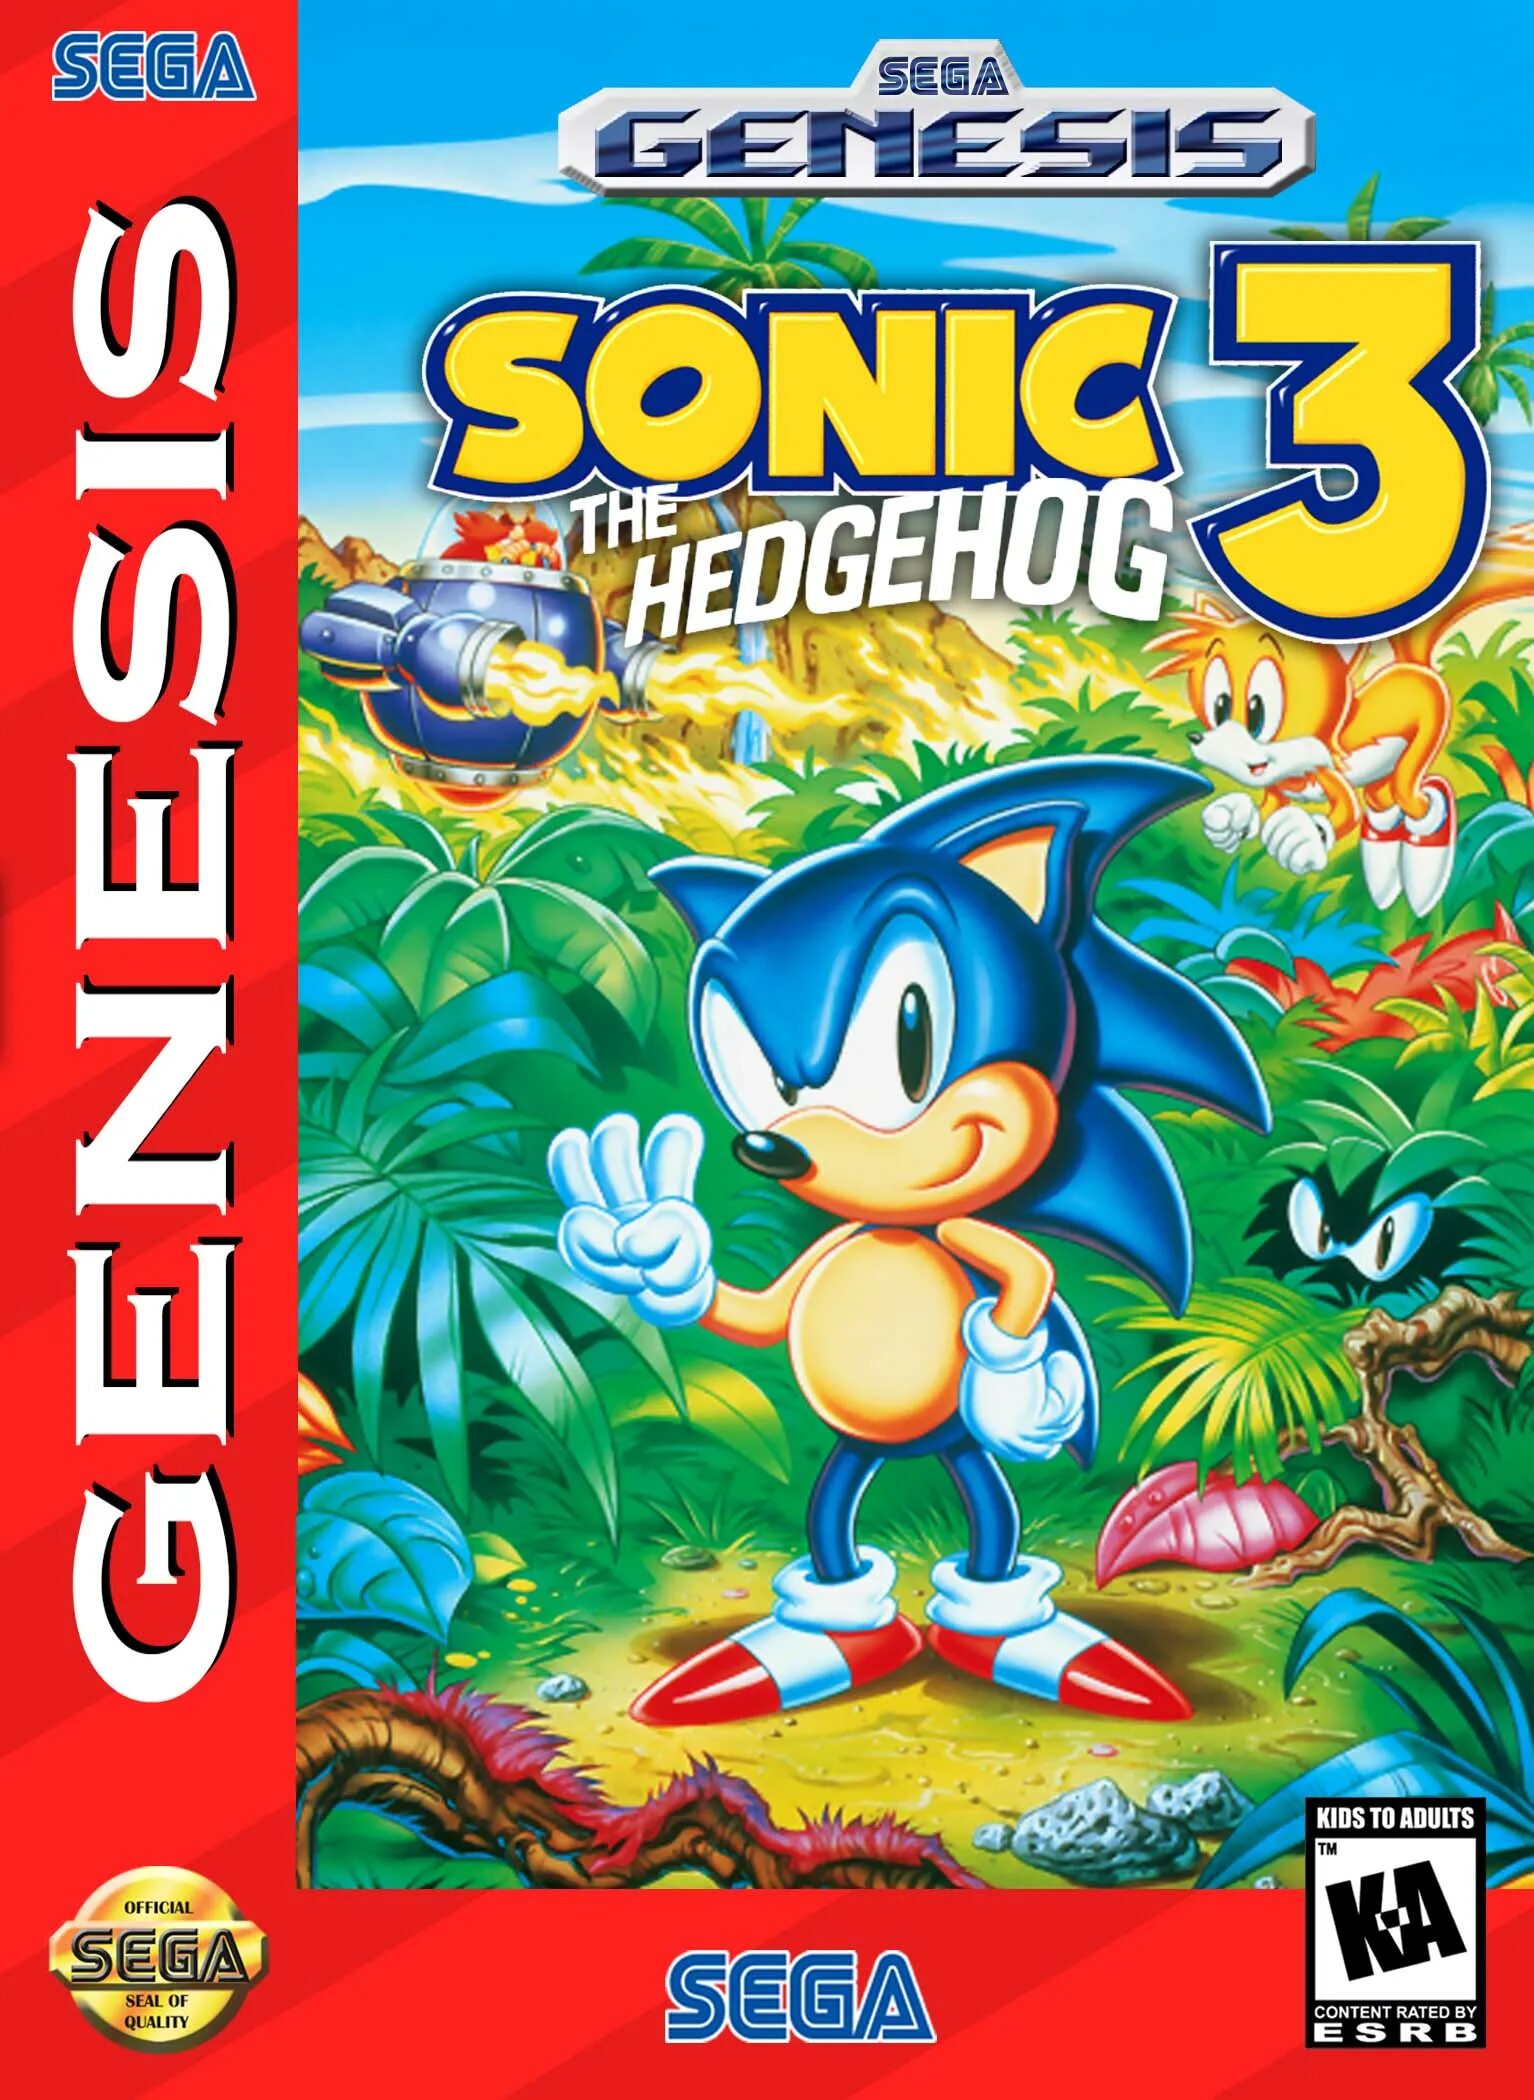 Игры соник сега 3. Sonic 3 Sega. Sonic 1 Sega Genesis. Sonic the Hedgehog 3 Sega Genesis. Sonic the Hedgehog Sega Genesis обложка.